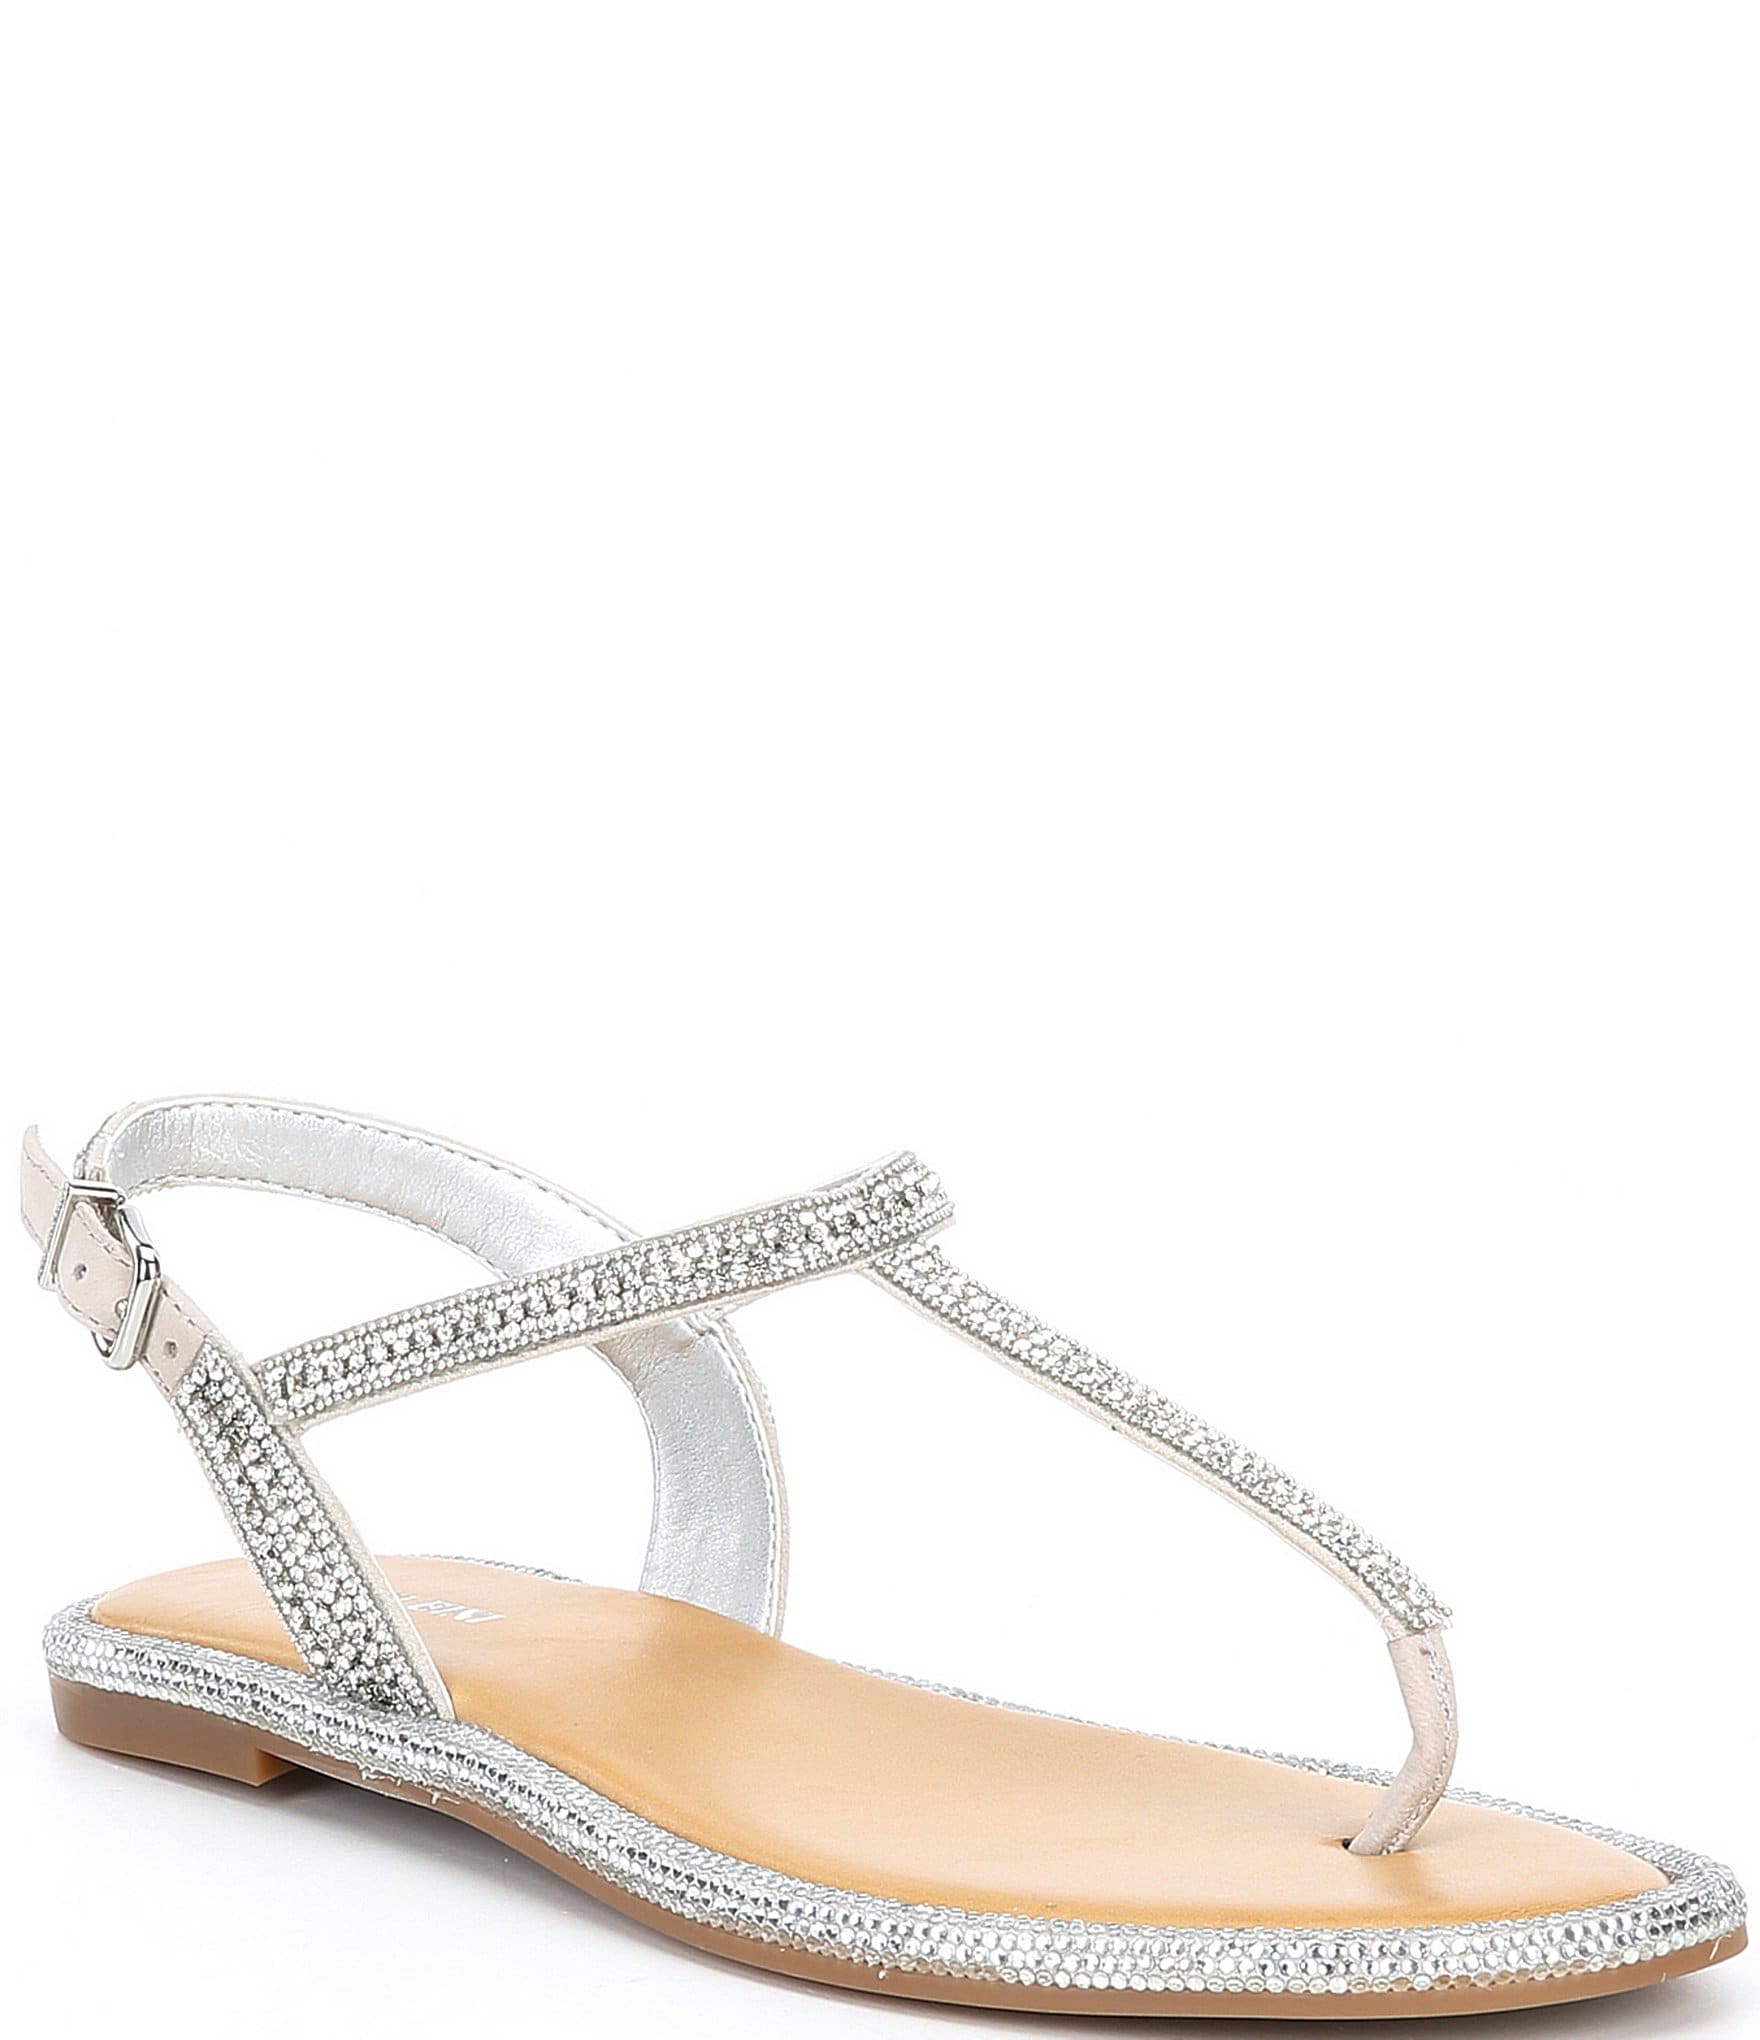 Unisa Silver T-strap Flat Sandals Pearls And Rhinestones Size 7 | eBay